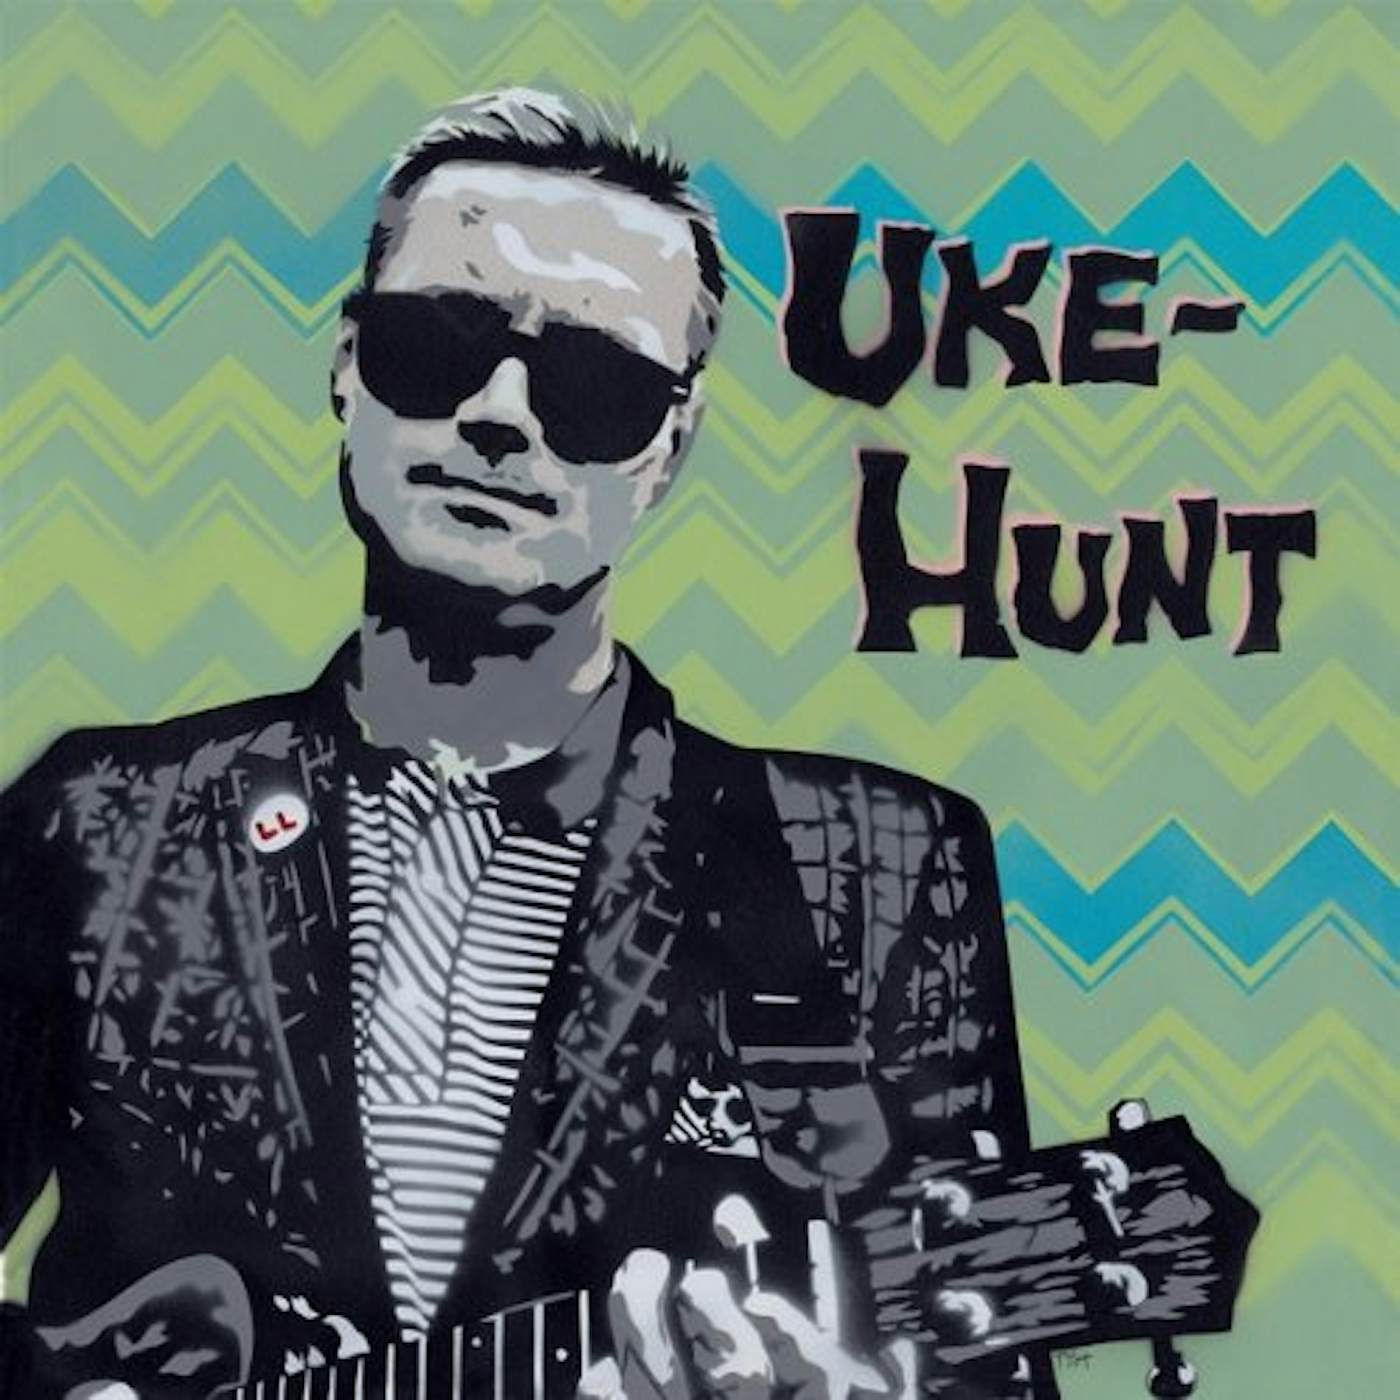 Uke-Hunt Vinyl Record